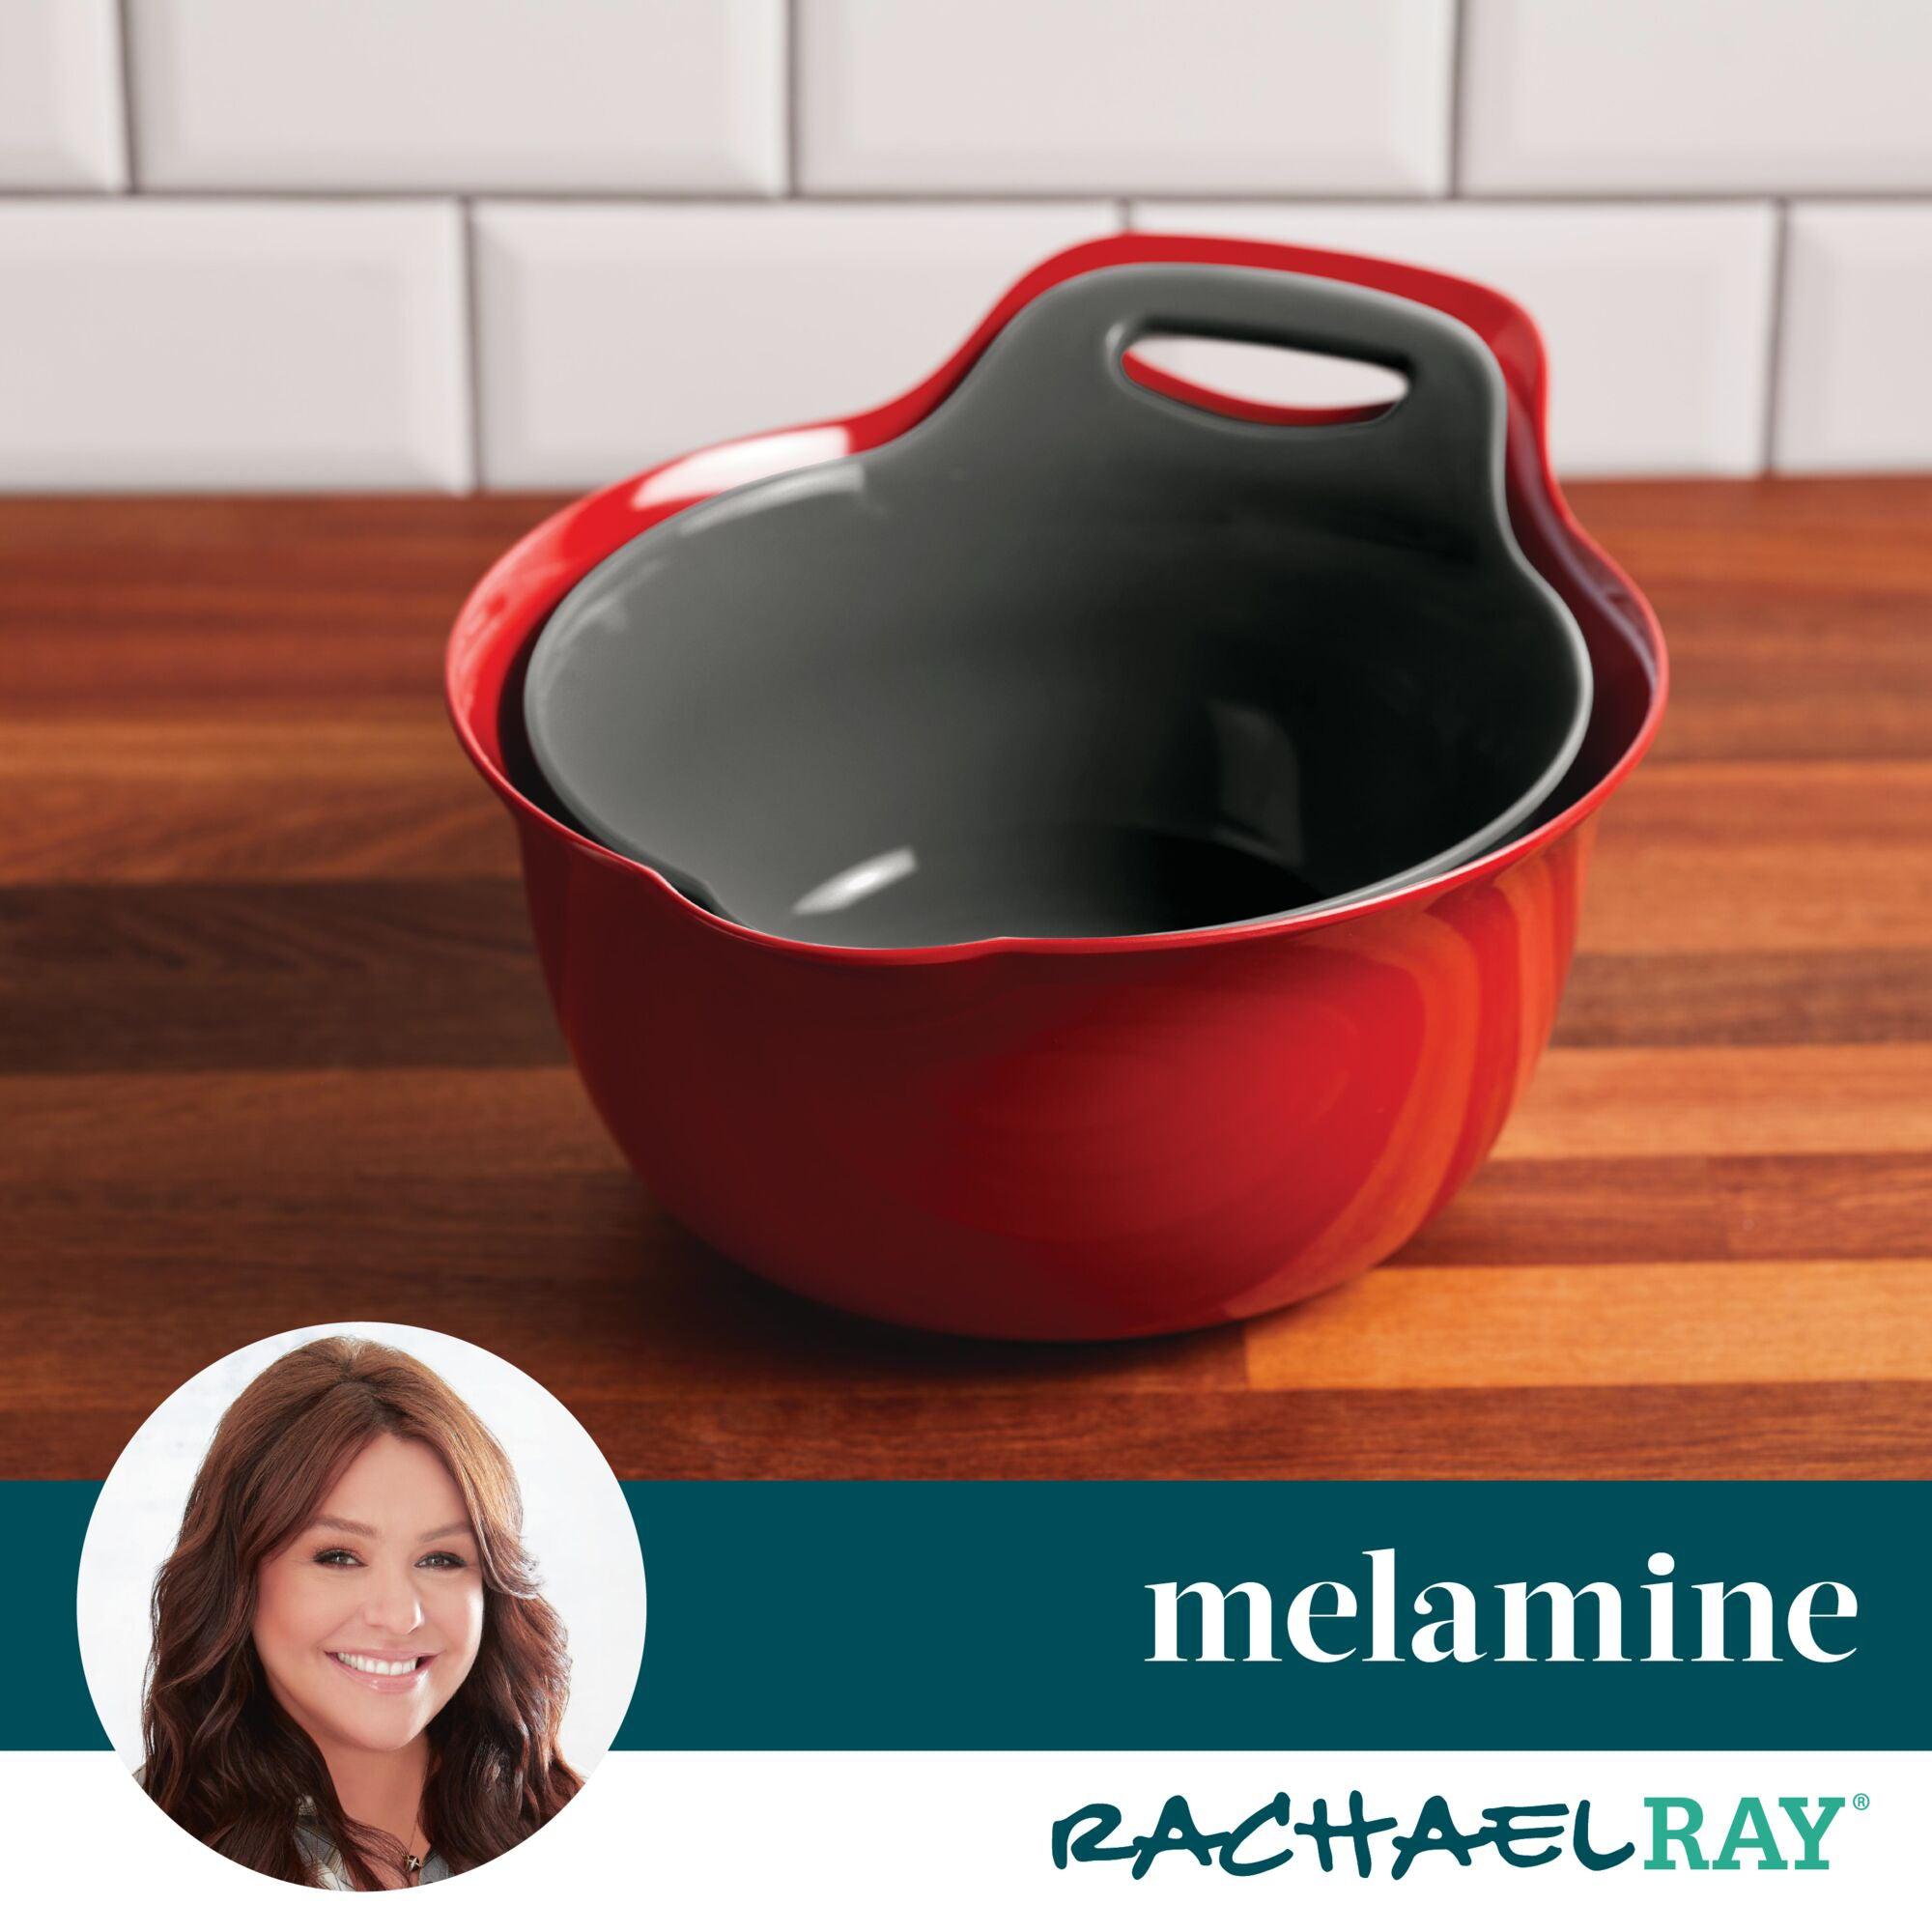 Rachael Ray 2-Piece Ceramic Mixing Bowl Set, Teal